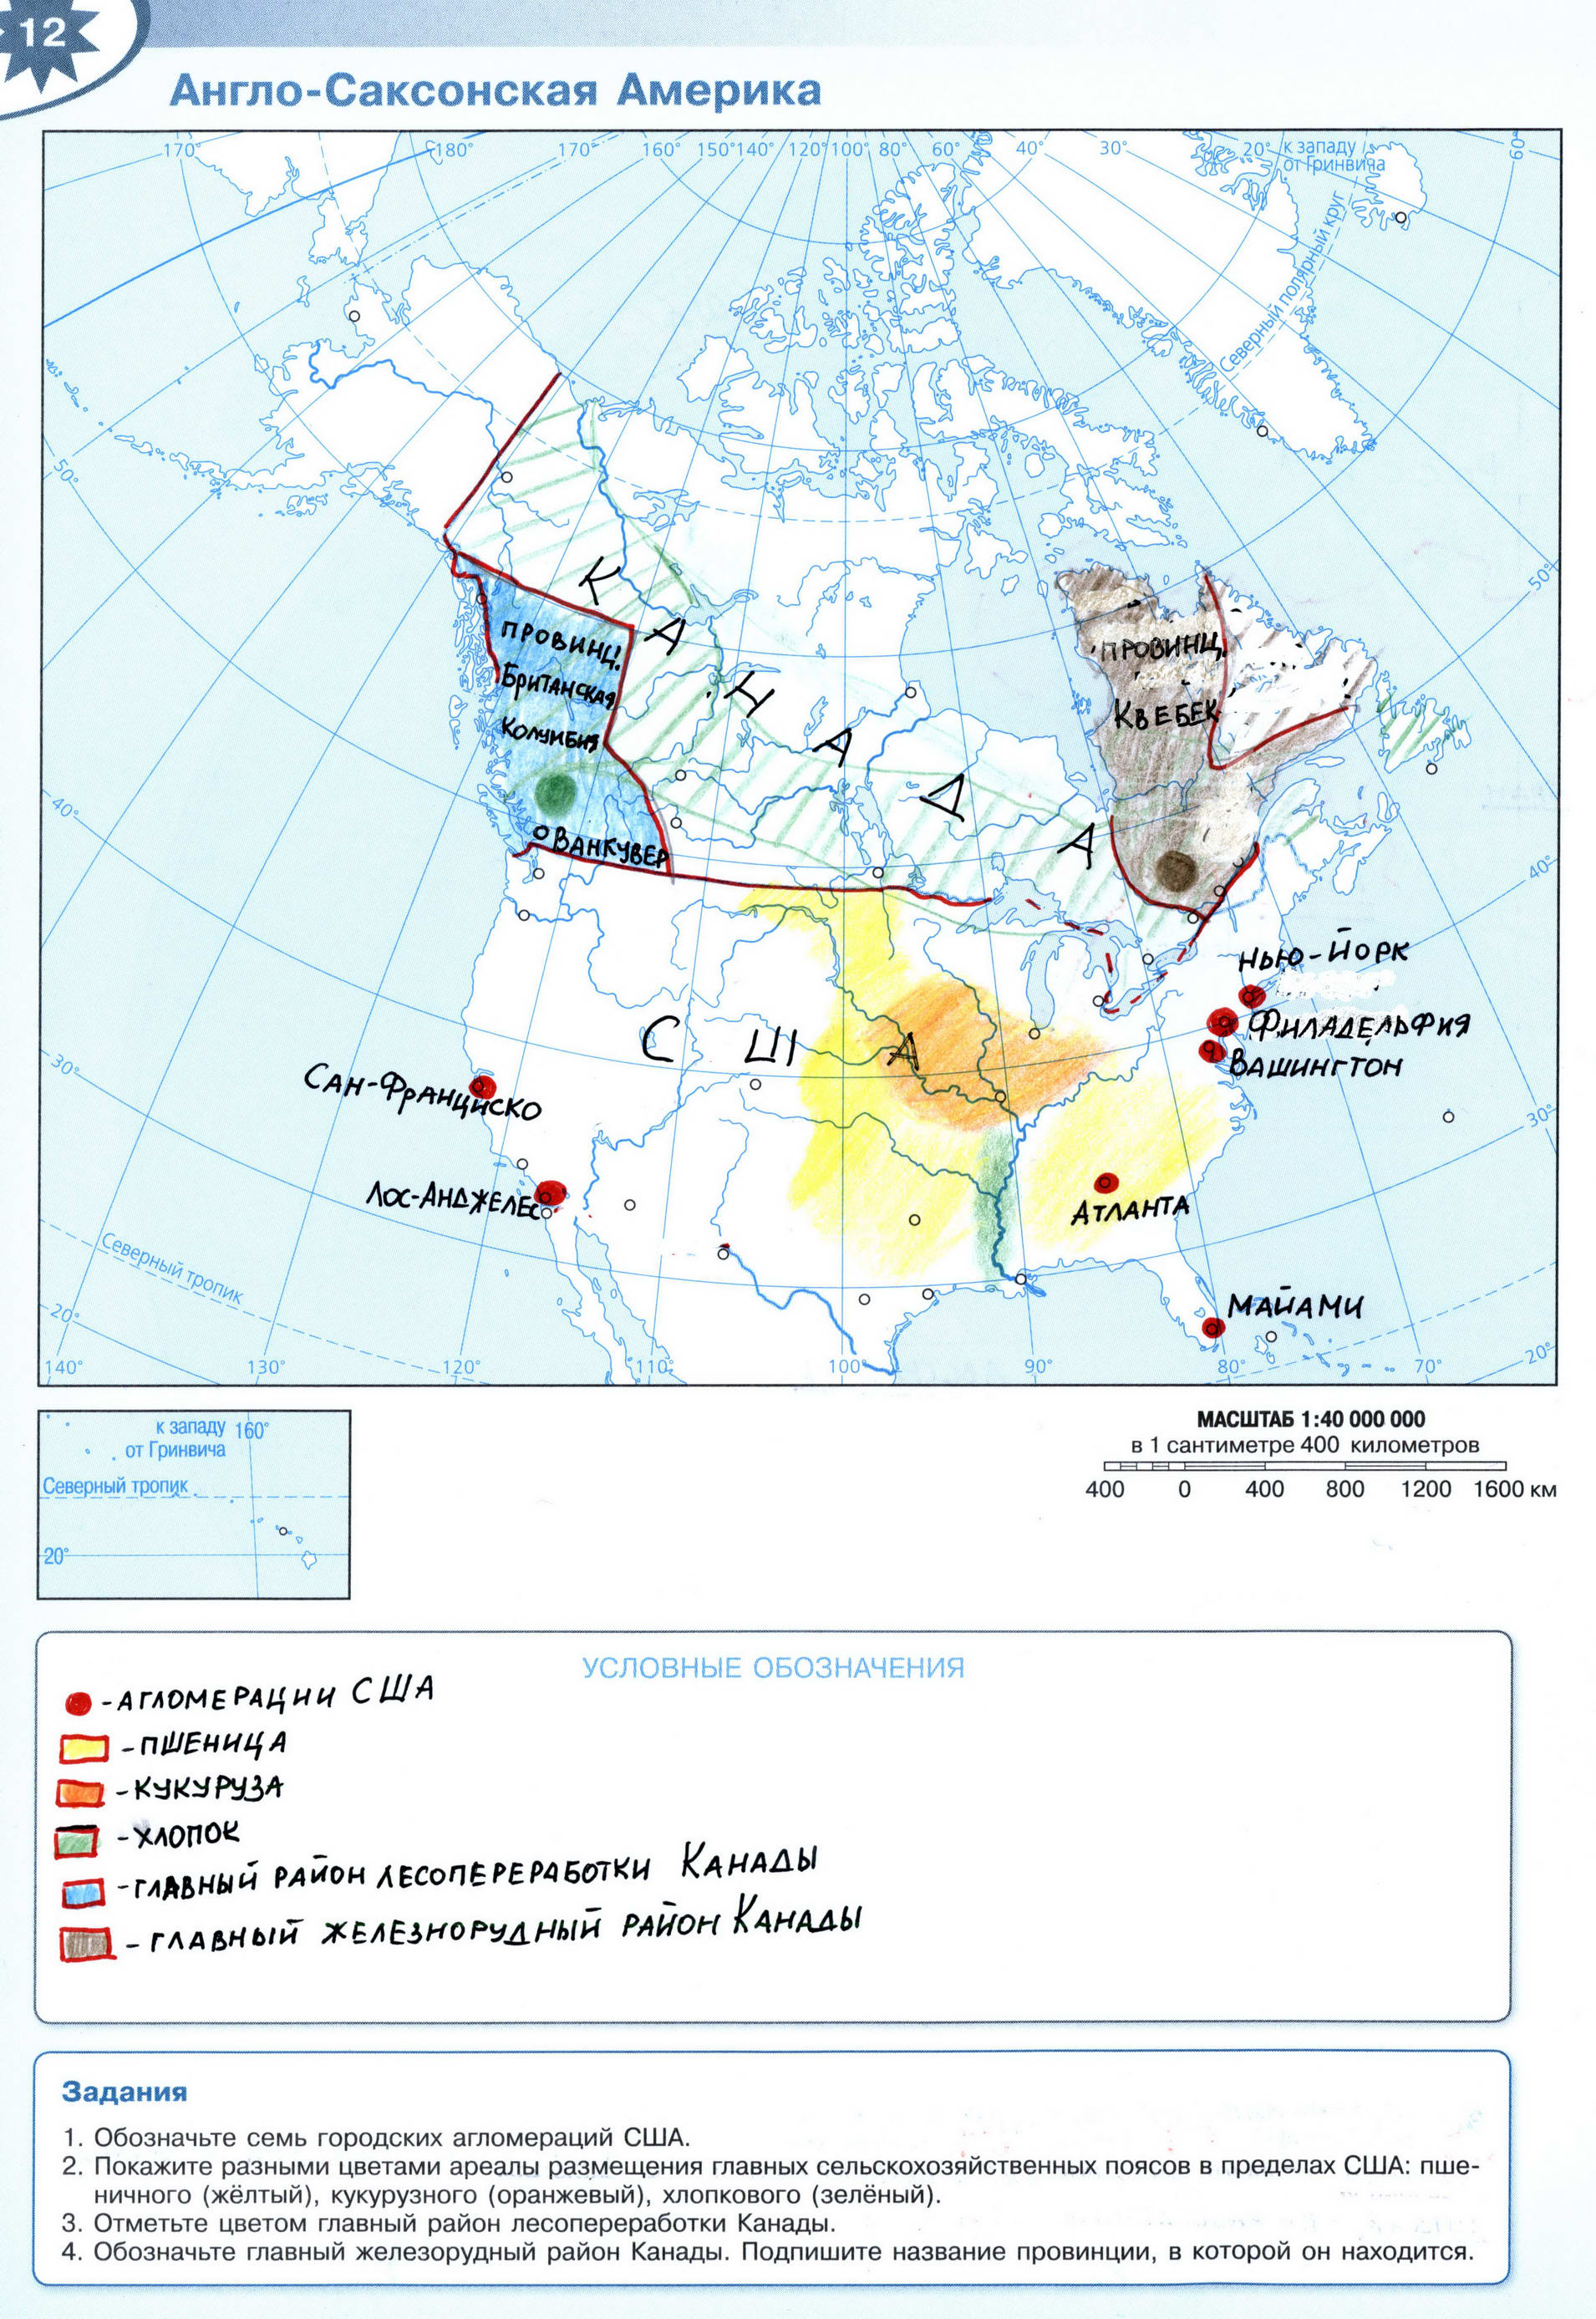 ГДЗ англо-саксонская америка контурная карта 10-11